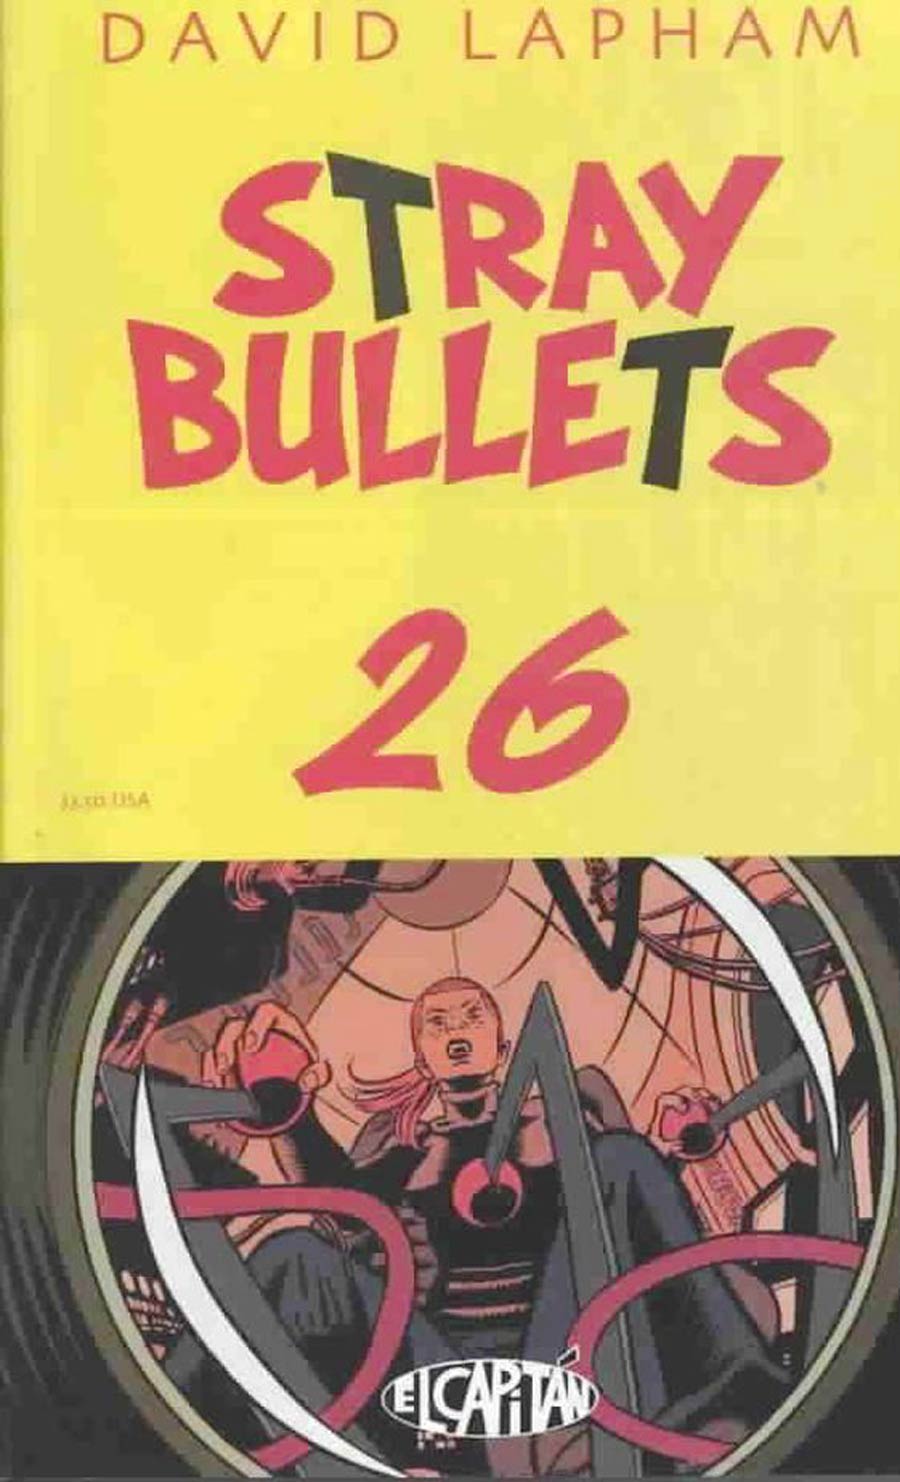 Stray Bullets #26